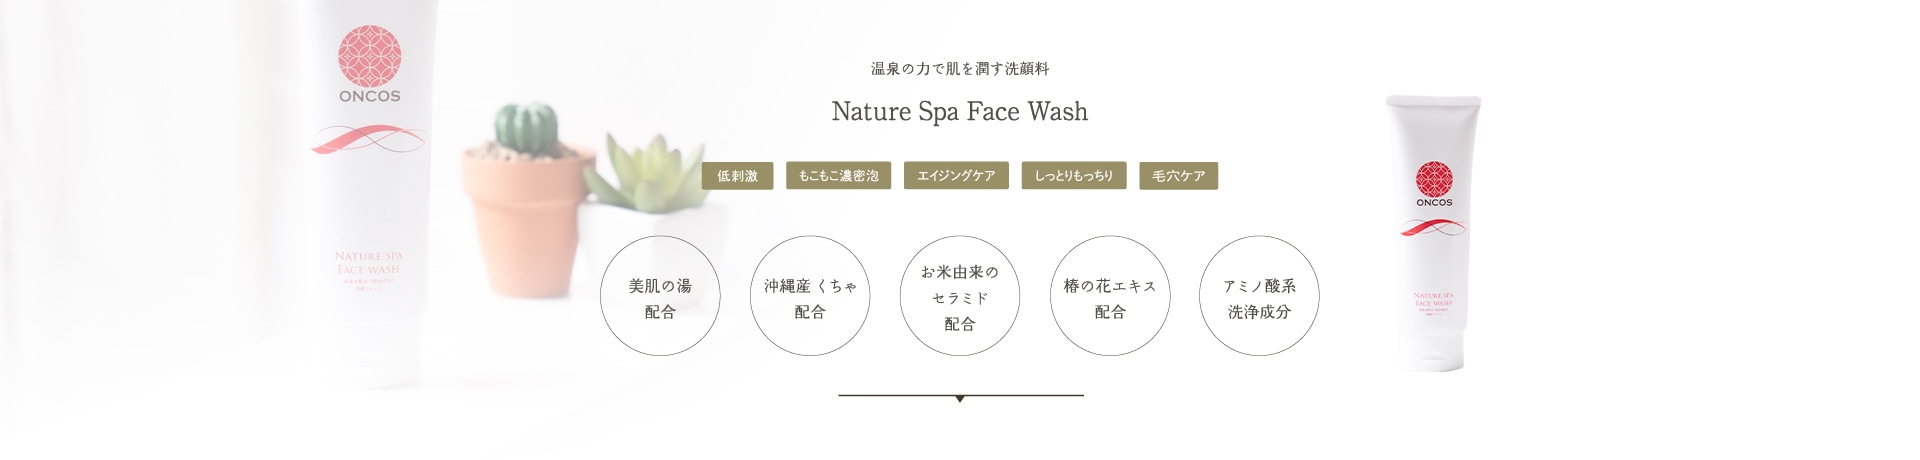 Nature Spa Face Wash